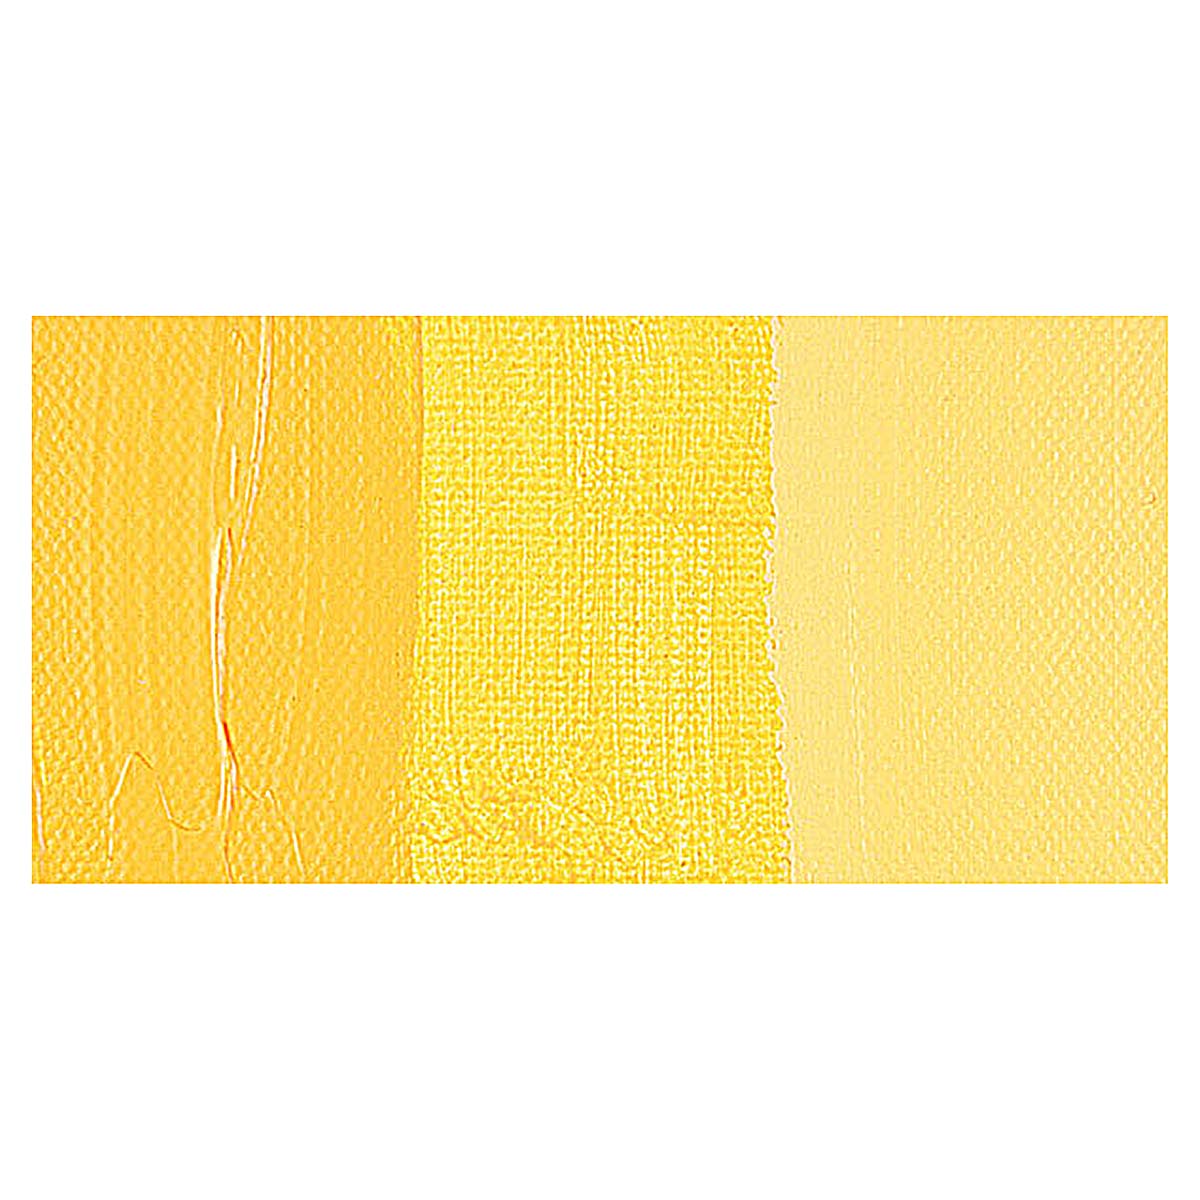 Golden Airbrush Medium #golden #airbrushmedium #acrylic #deovir #deovirarts  #paintingmaterials #paintingsupplies #artmaterials #artsupplies…